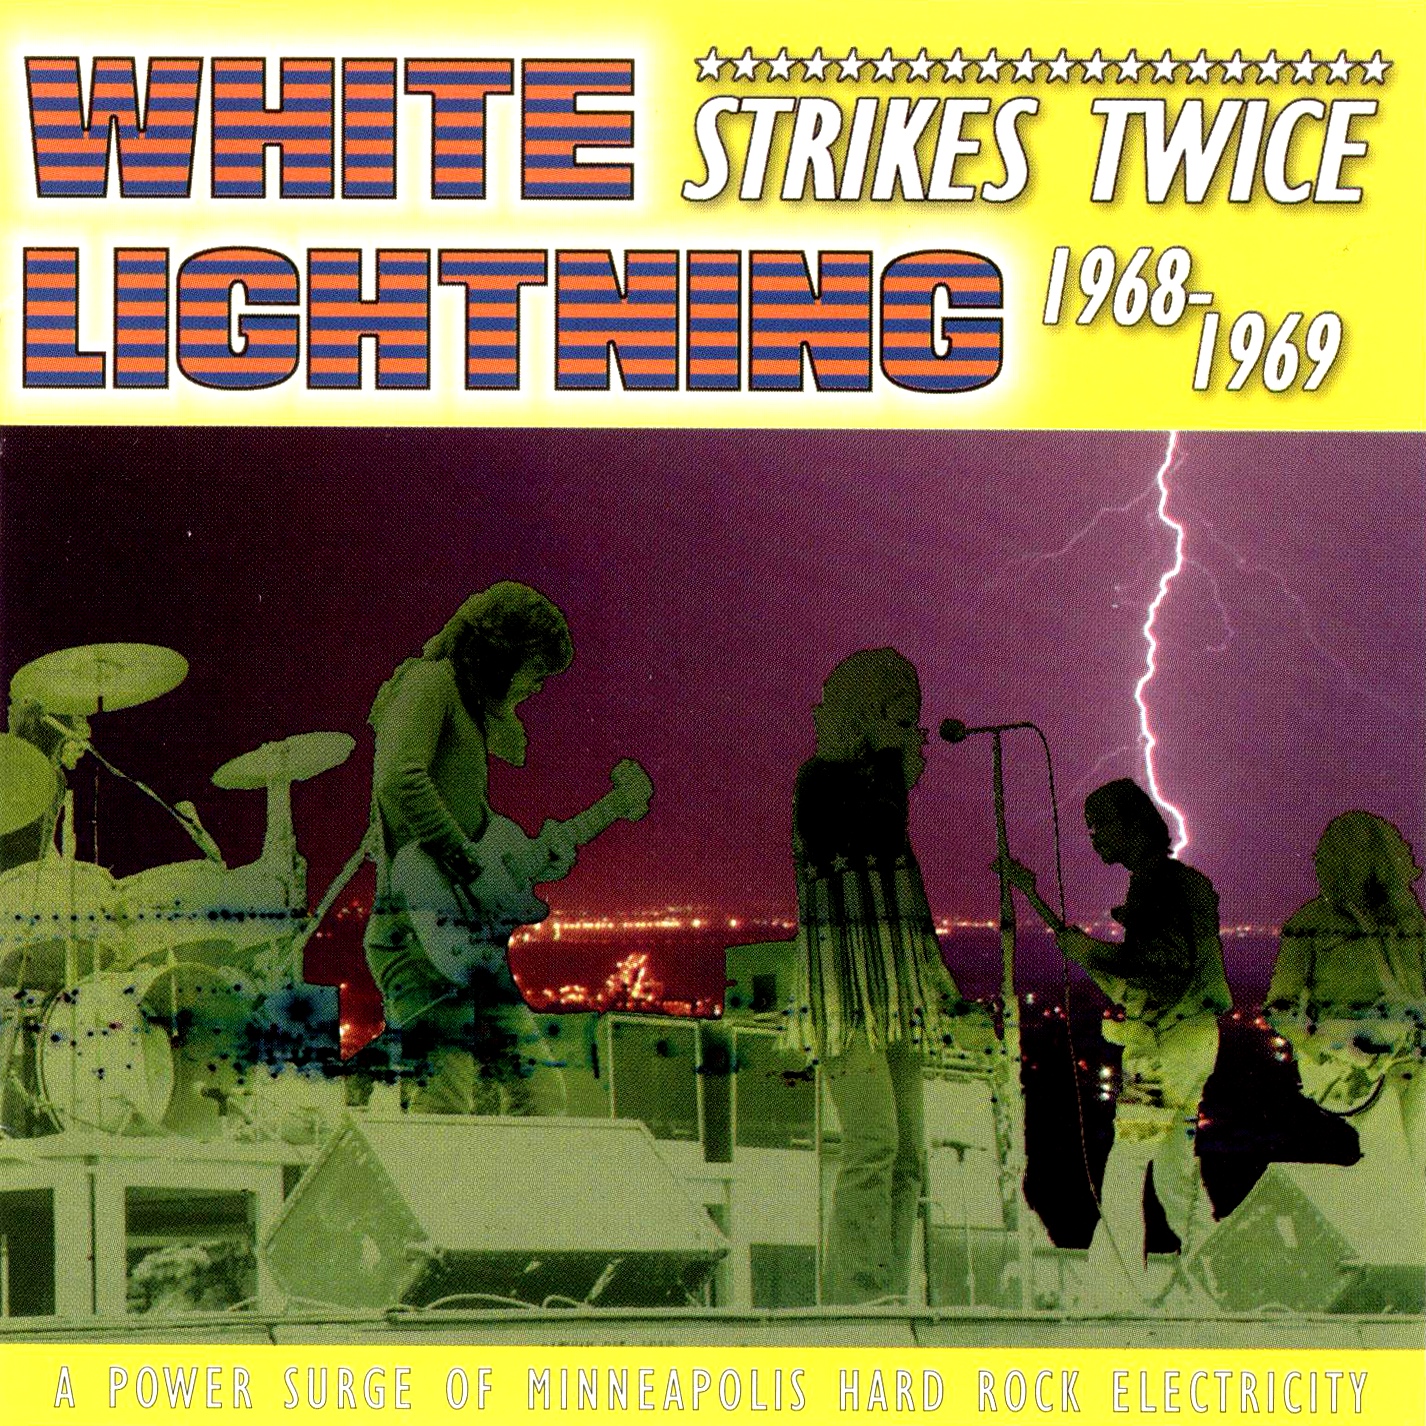 Lightning Strikes twice. White Lightning группа. Nelson - Lightning Strikes twice. The Litter - $ 100 Fine (1968). The lightning last night